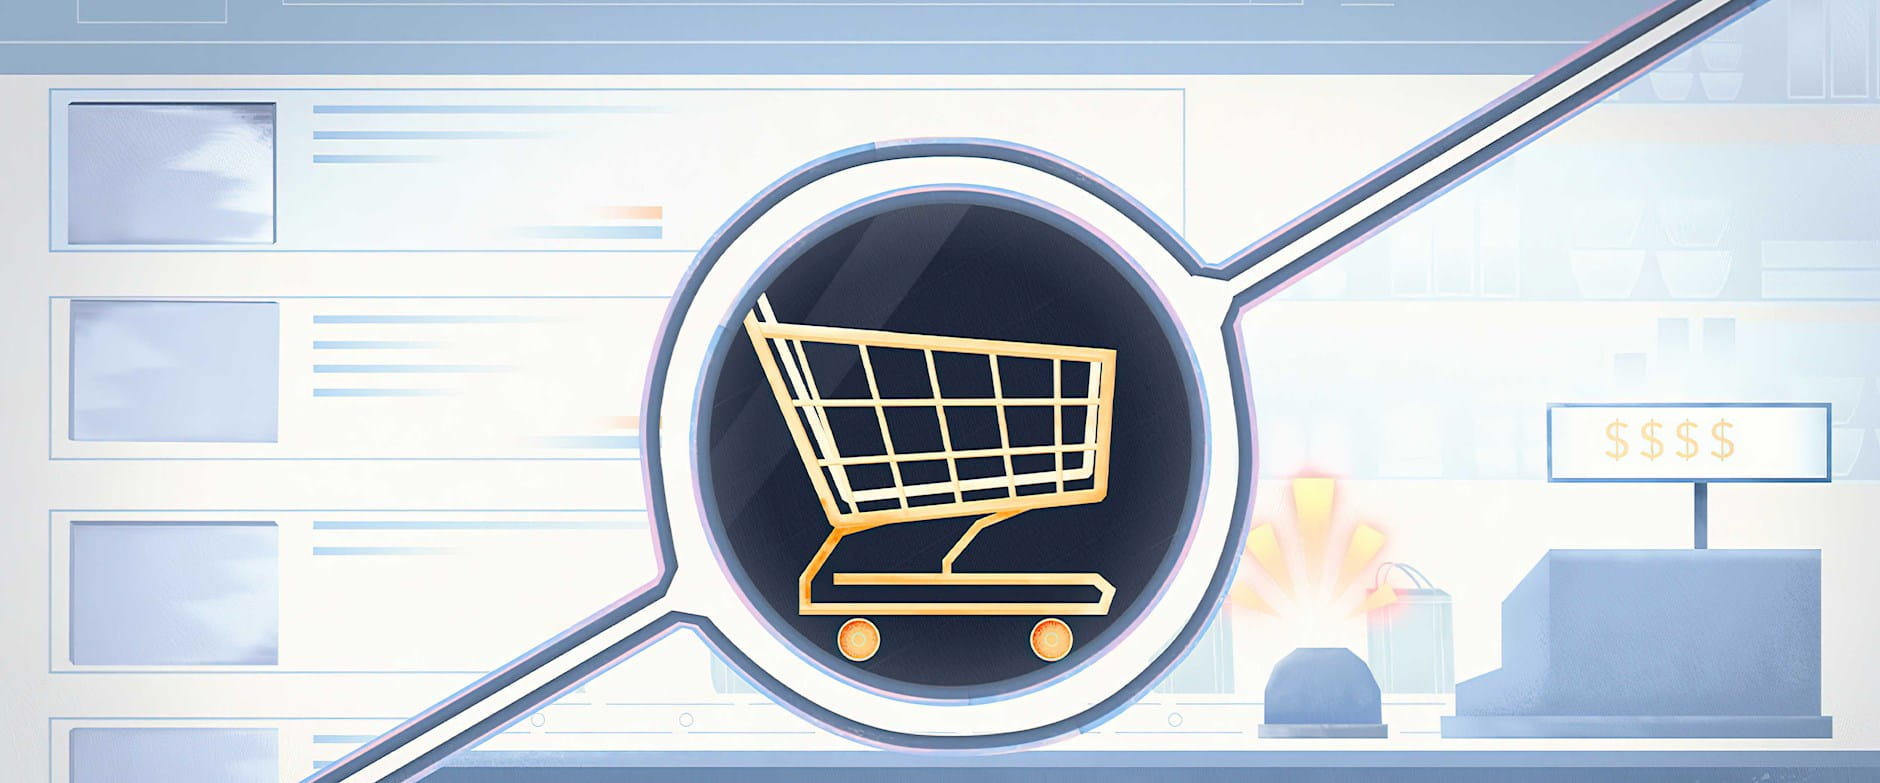 Shopping cart symbol over a digital shopping site screen